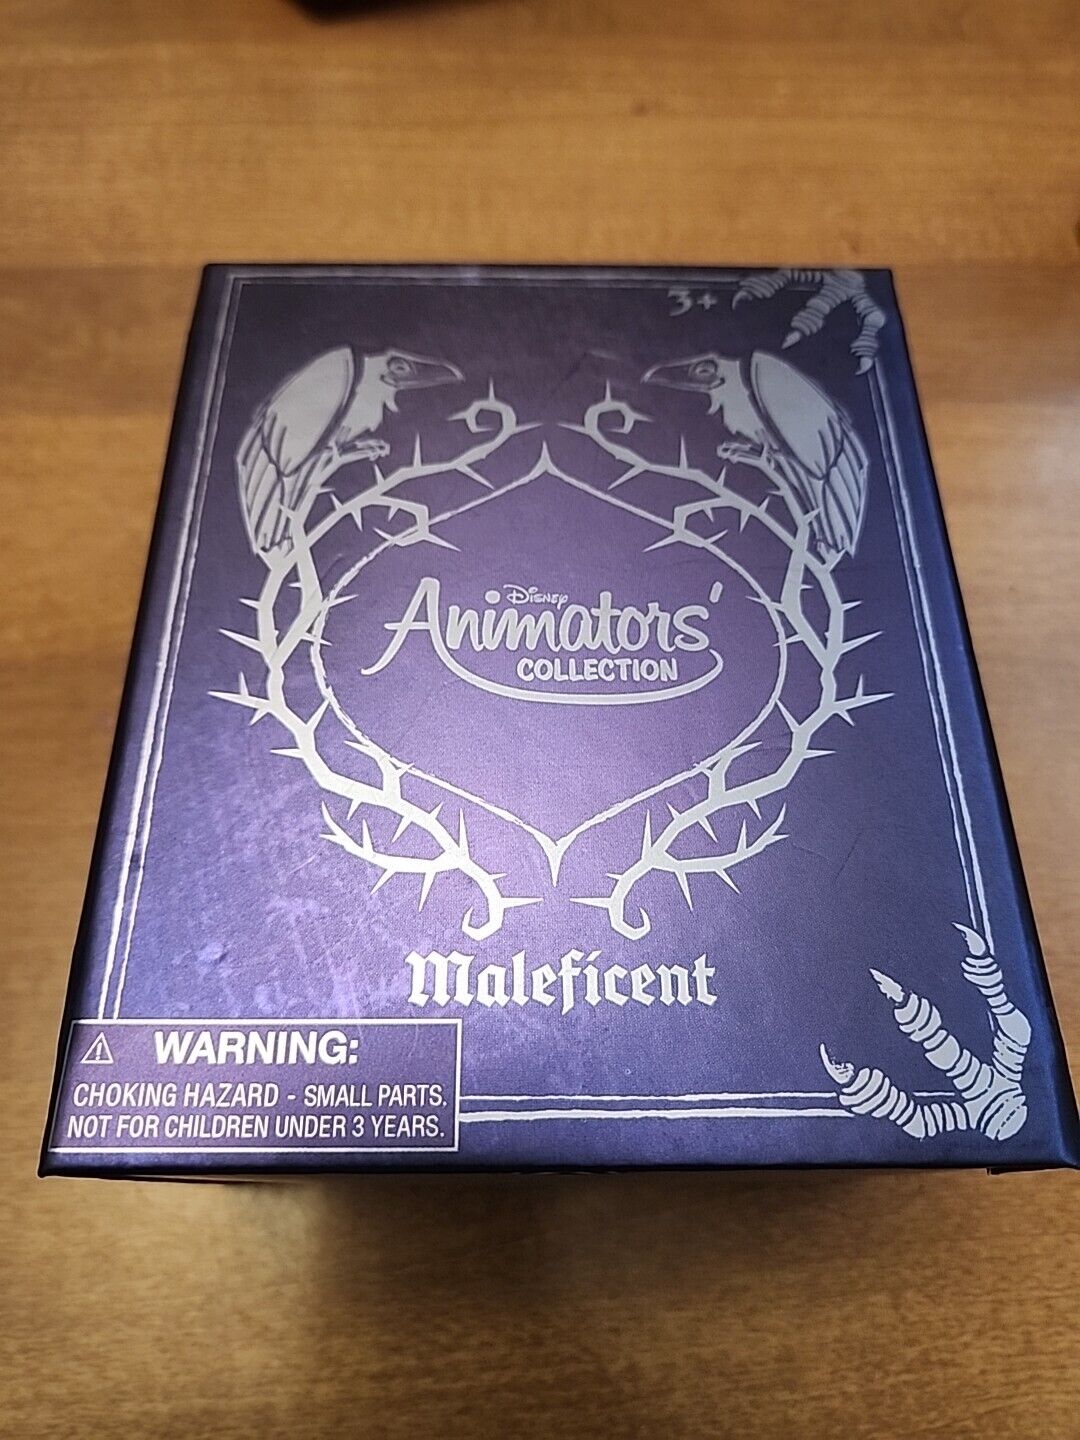 NEW Disney Animators Collection Maleficent Vinyl Figure. In box, NEVER removed